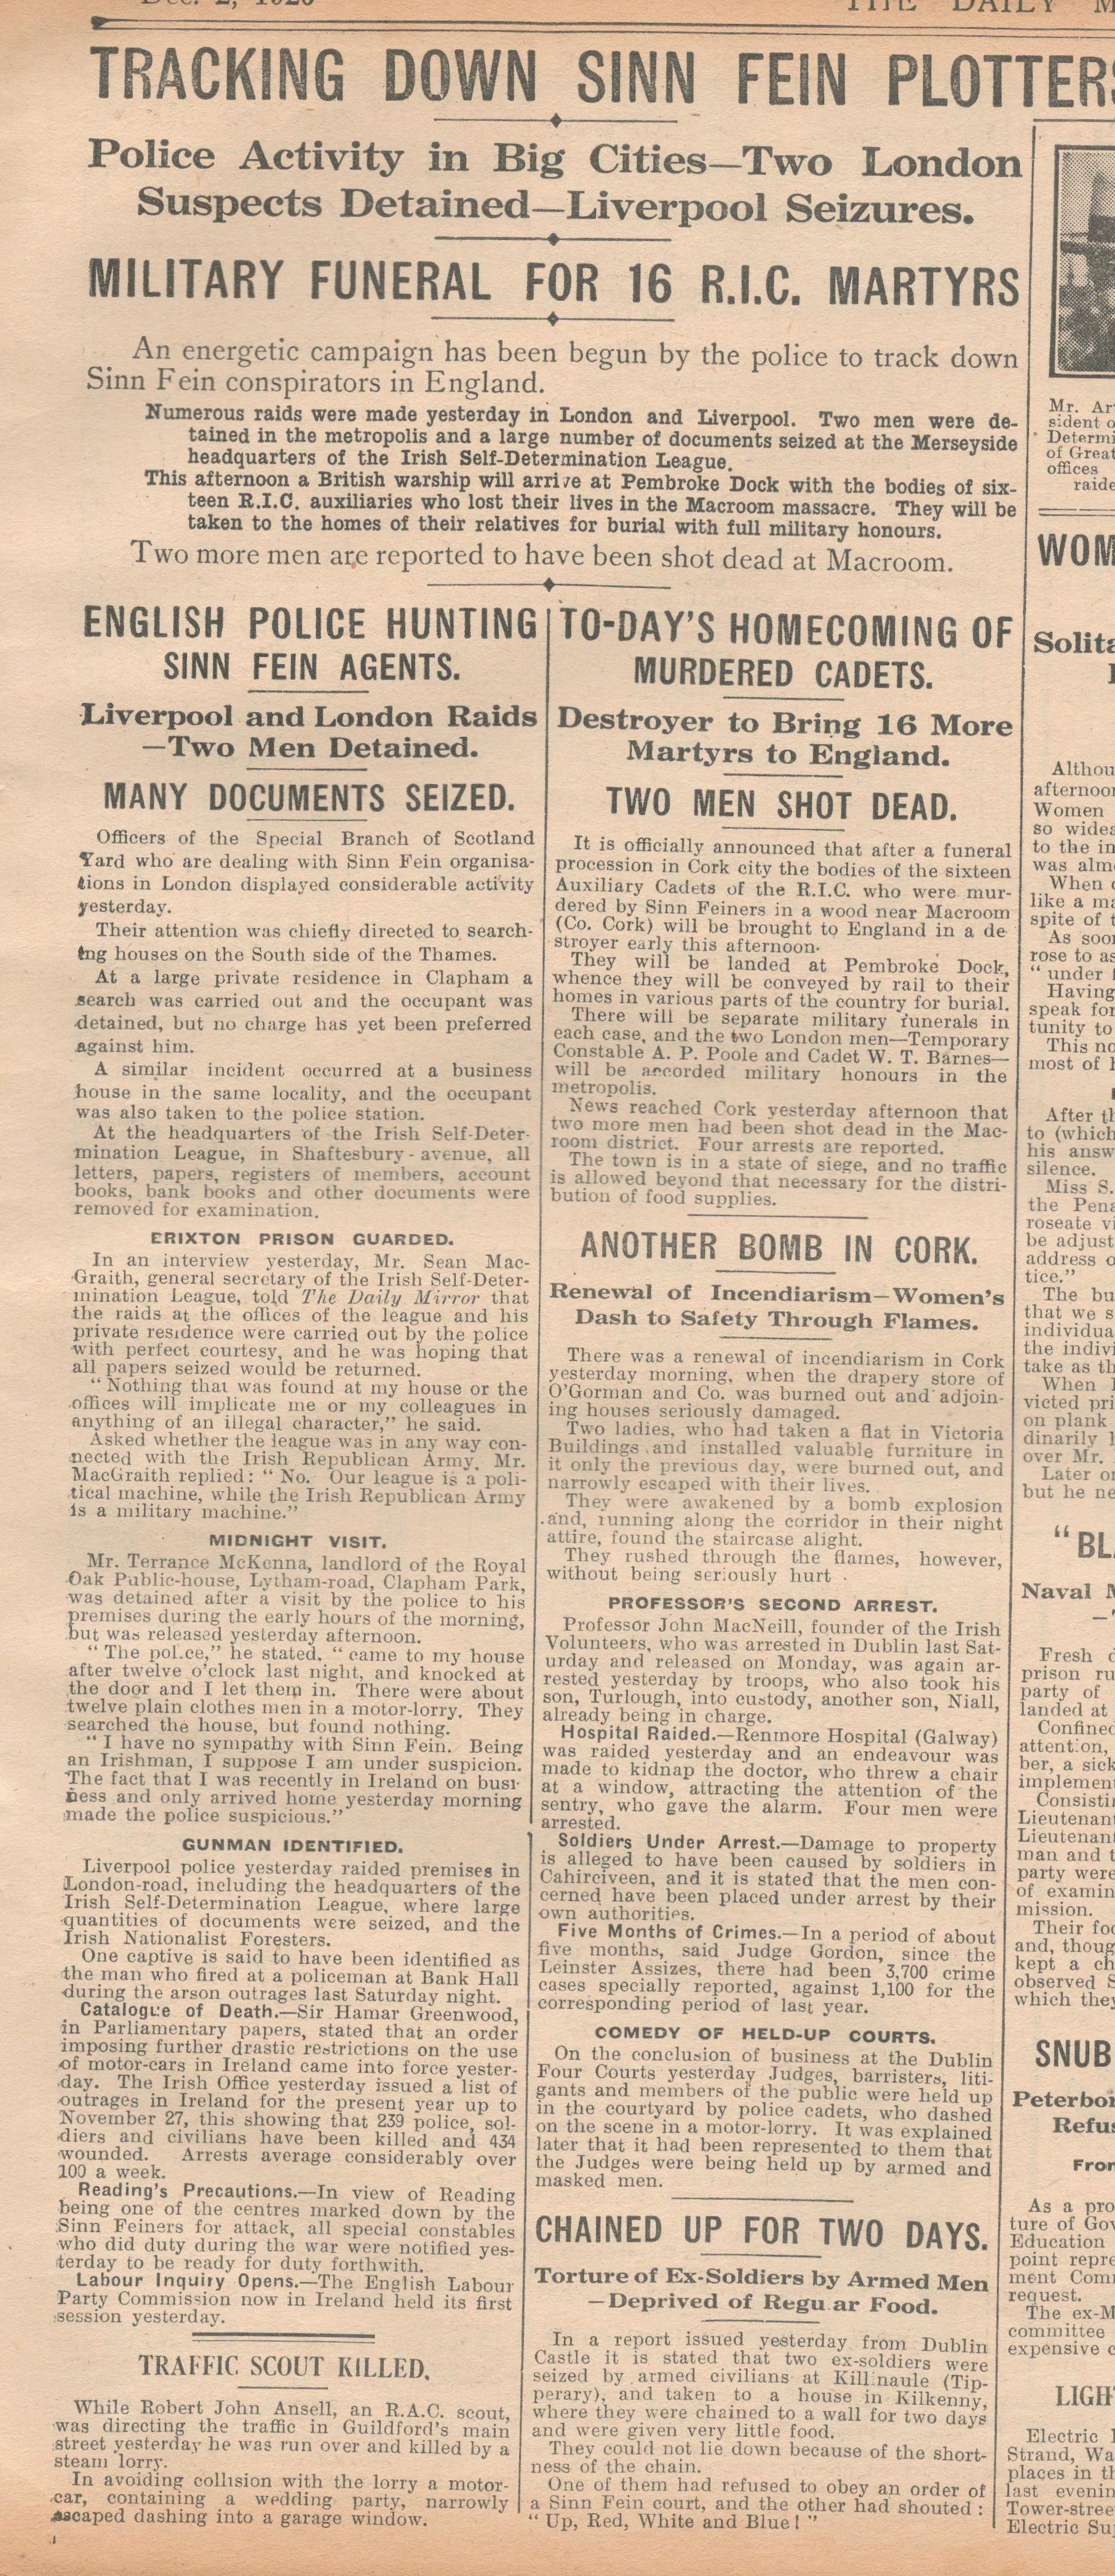 Antique Daily Mirror Newspaper 1920 Tracking Down Sinn Fein Flying Column Ambush at Macroom. - Image 2 of 3